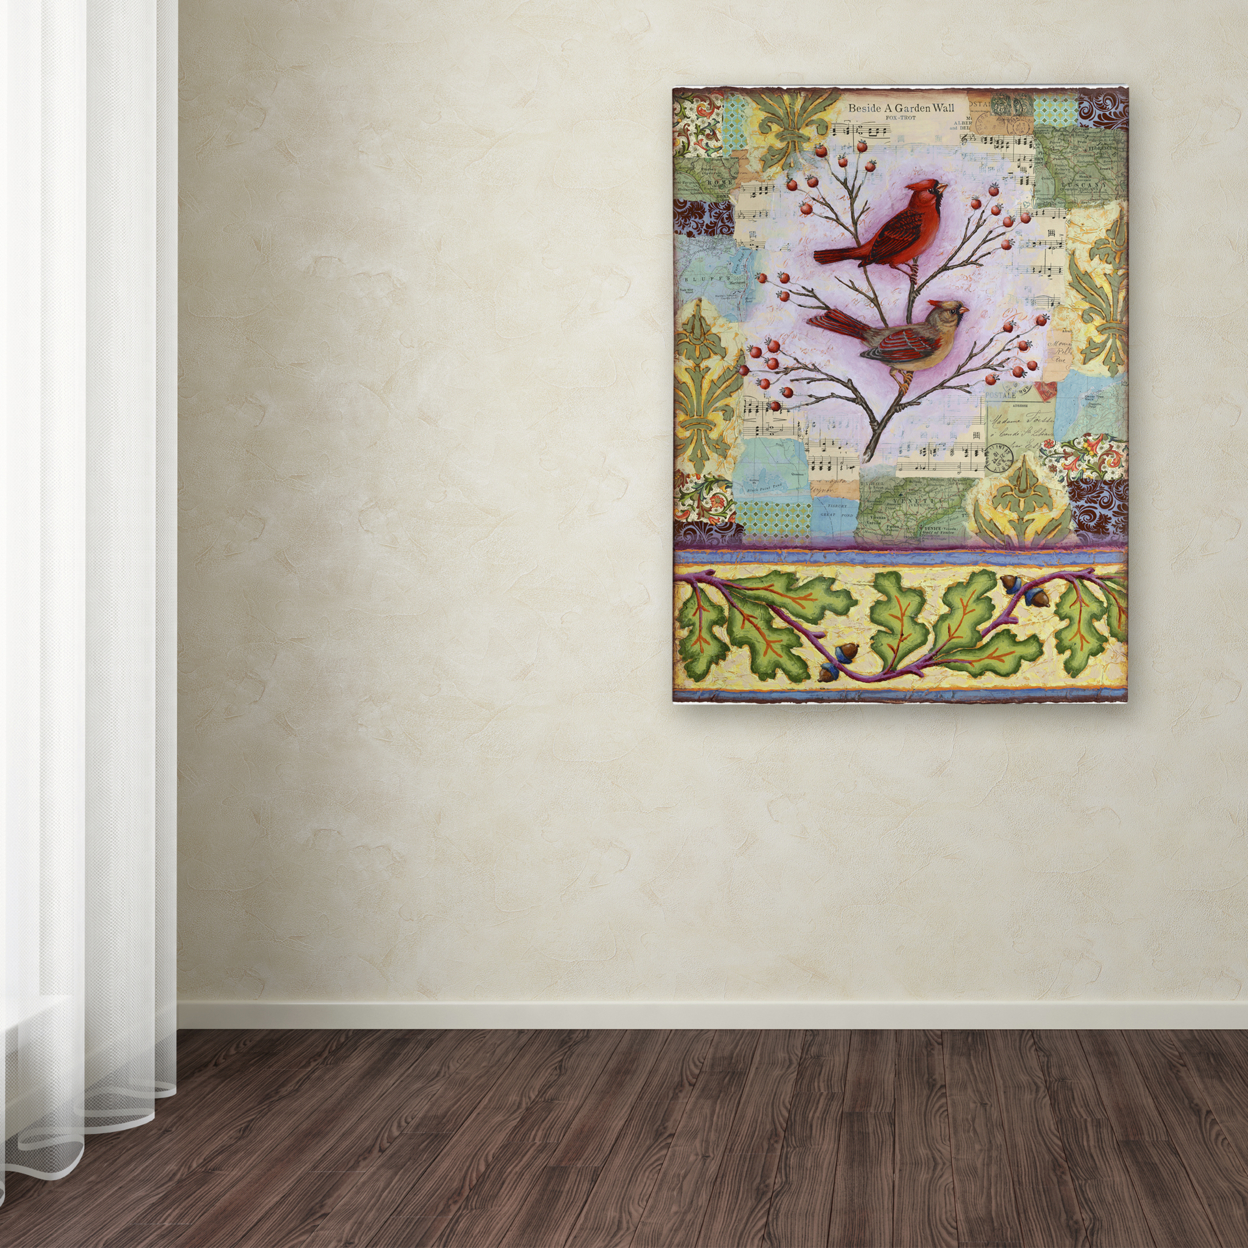 Rachel Paxton 'Garden Wall' Canvas Wall Art 35 X 47 Inches